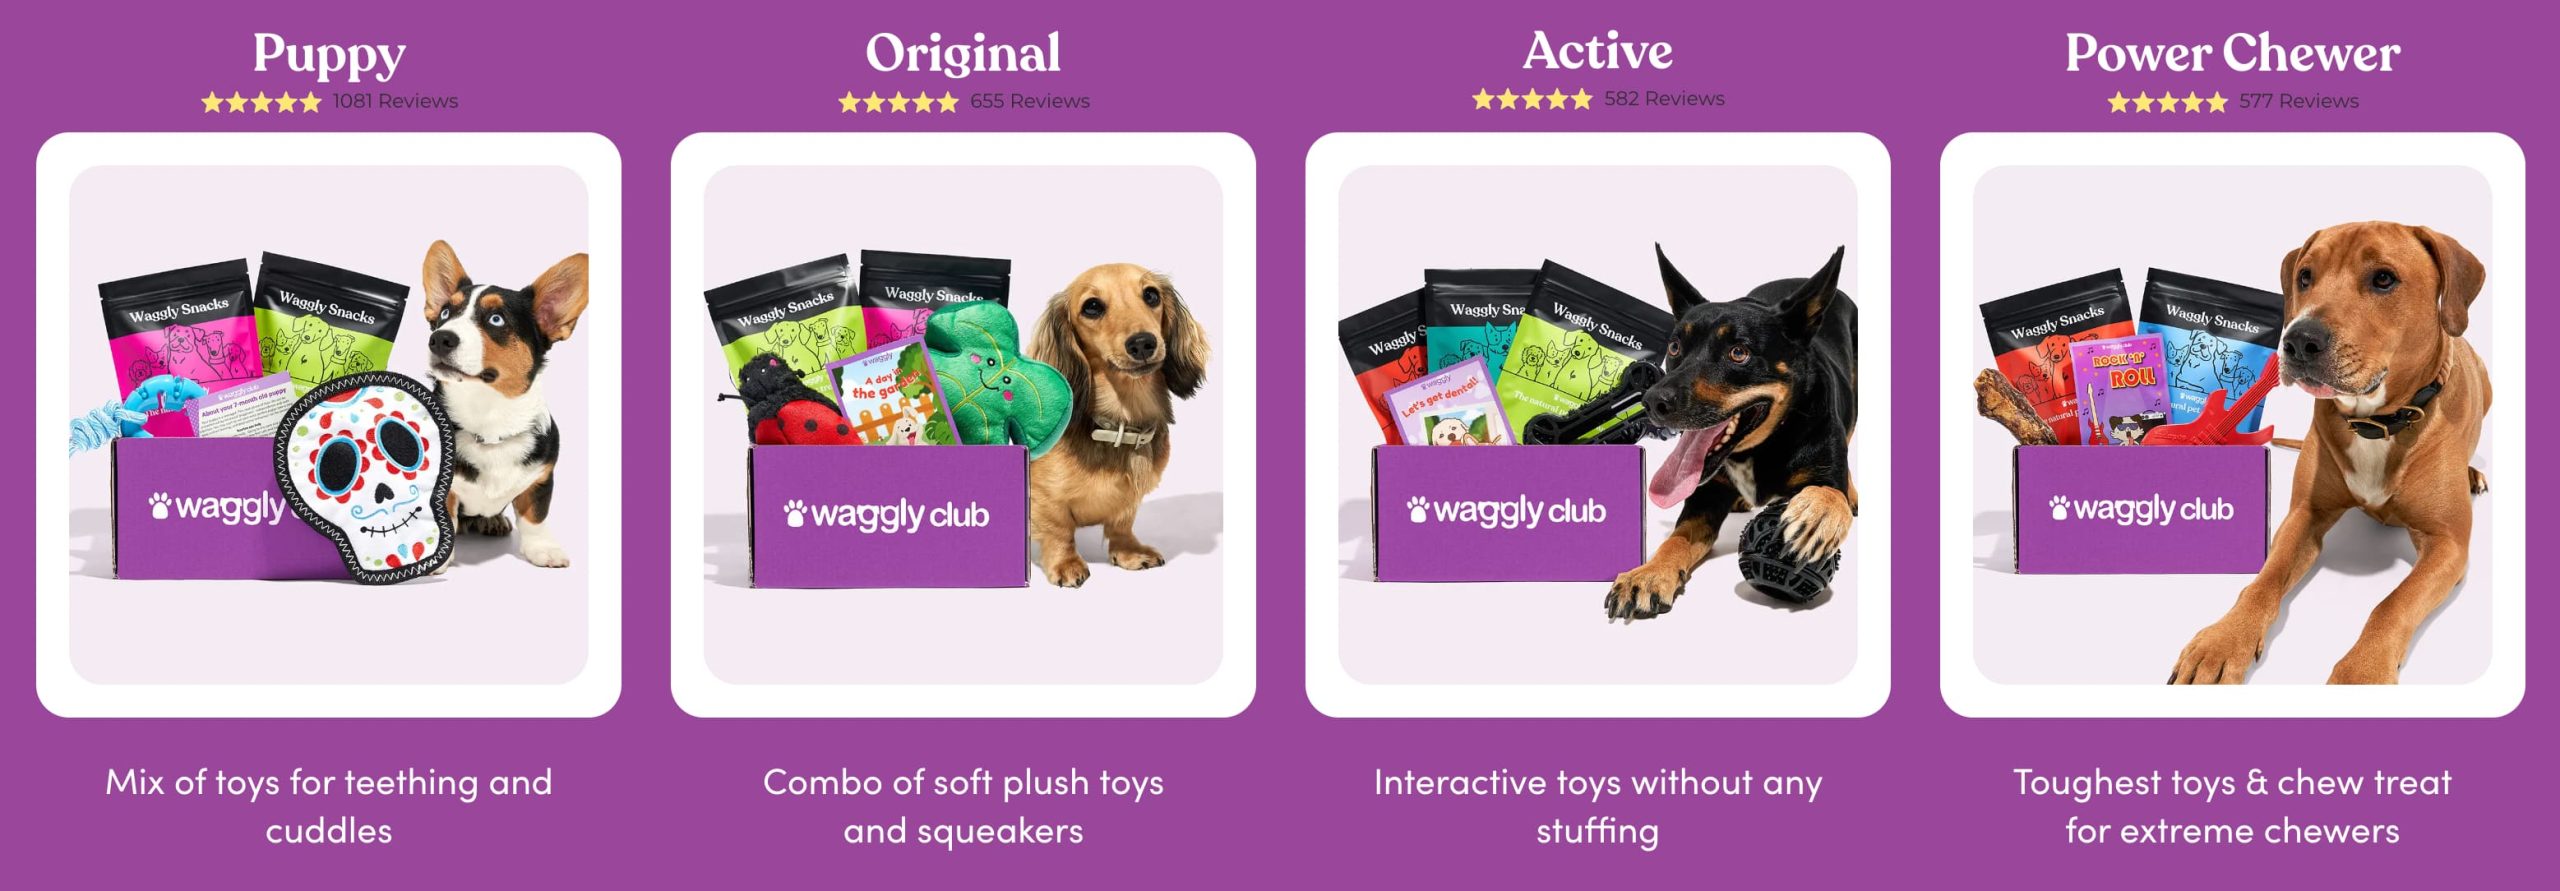 Waggly club dog toys treats click frenzy mayhem